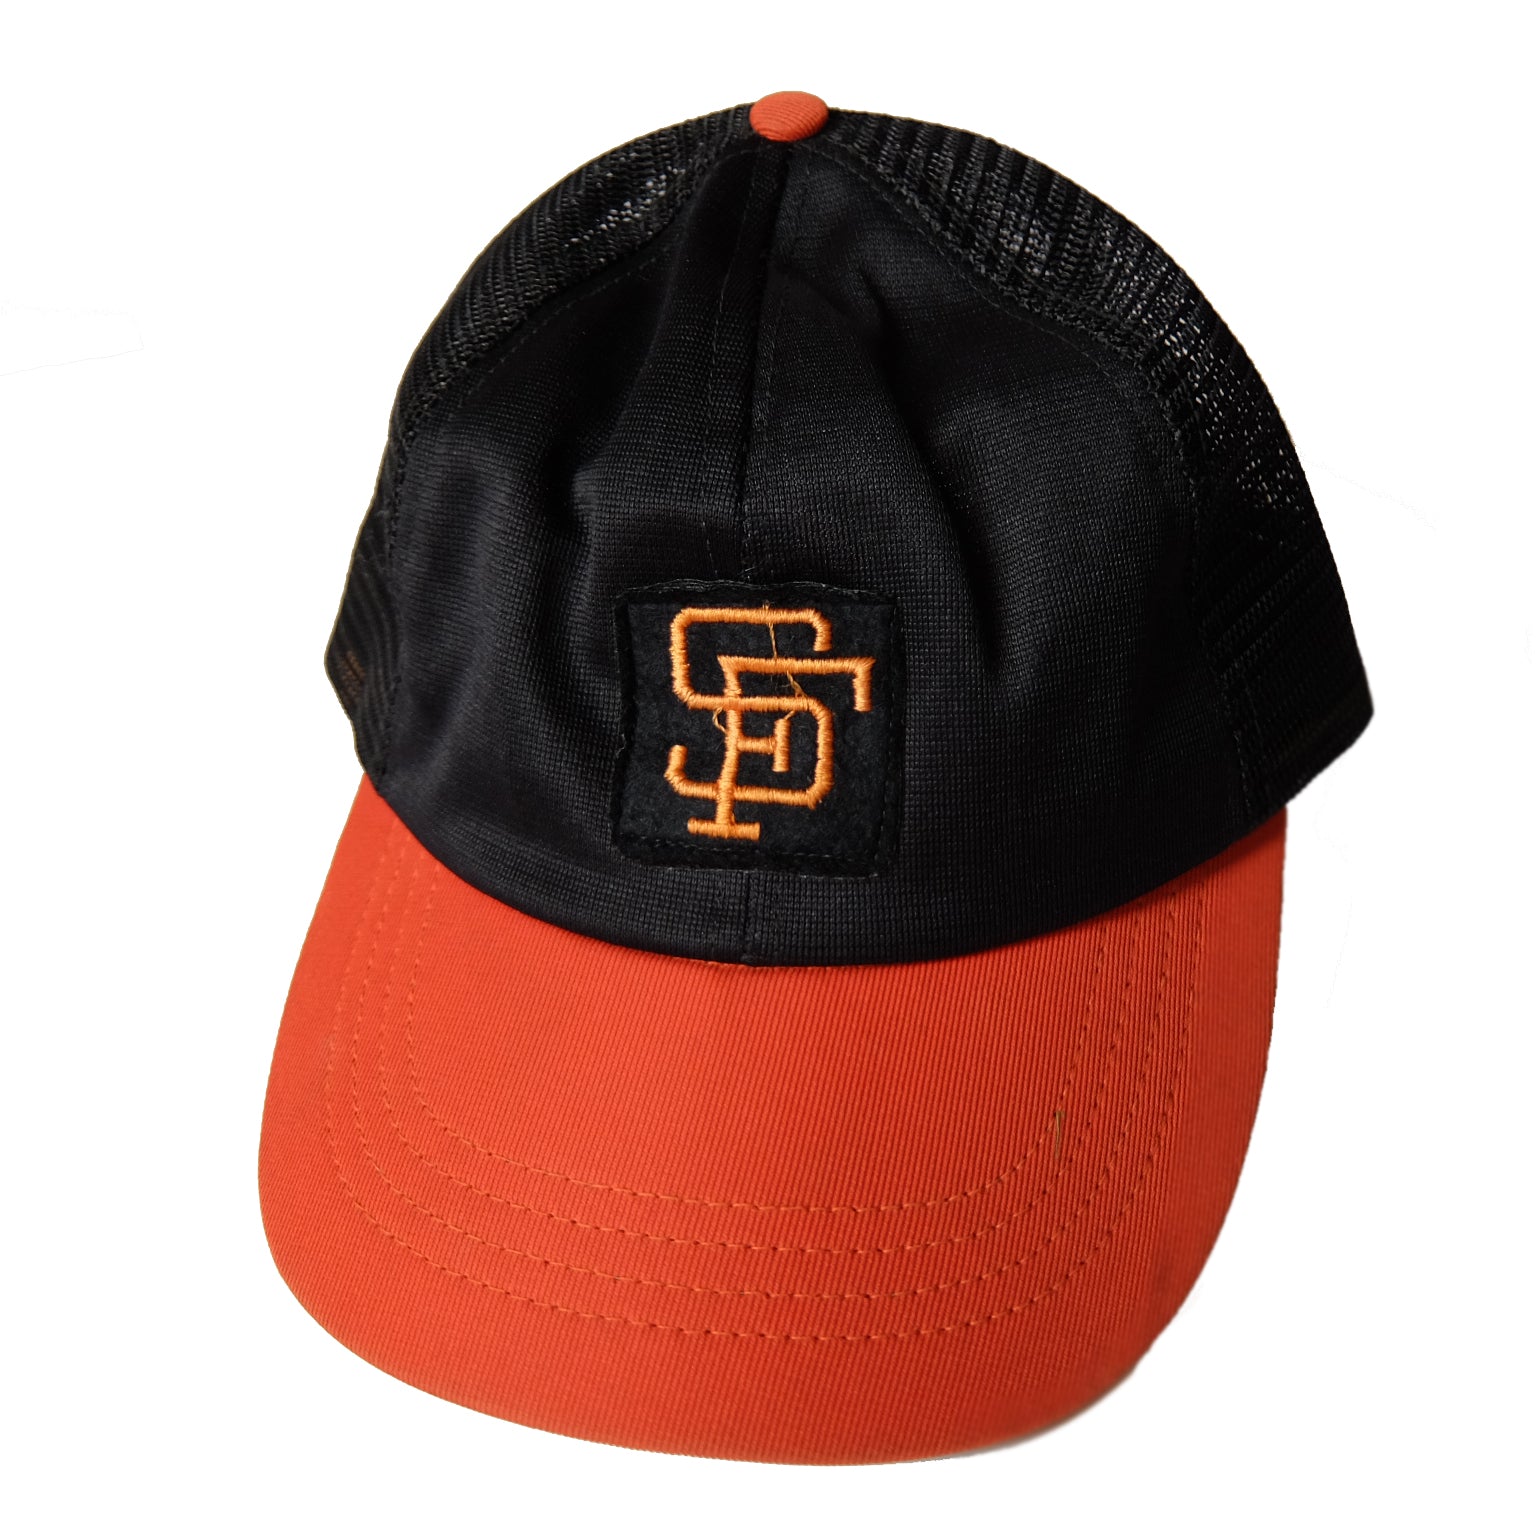 Authentic Vintage San Francisco SF Giants Baseball Cap, Men's